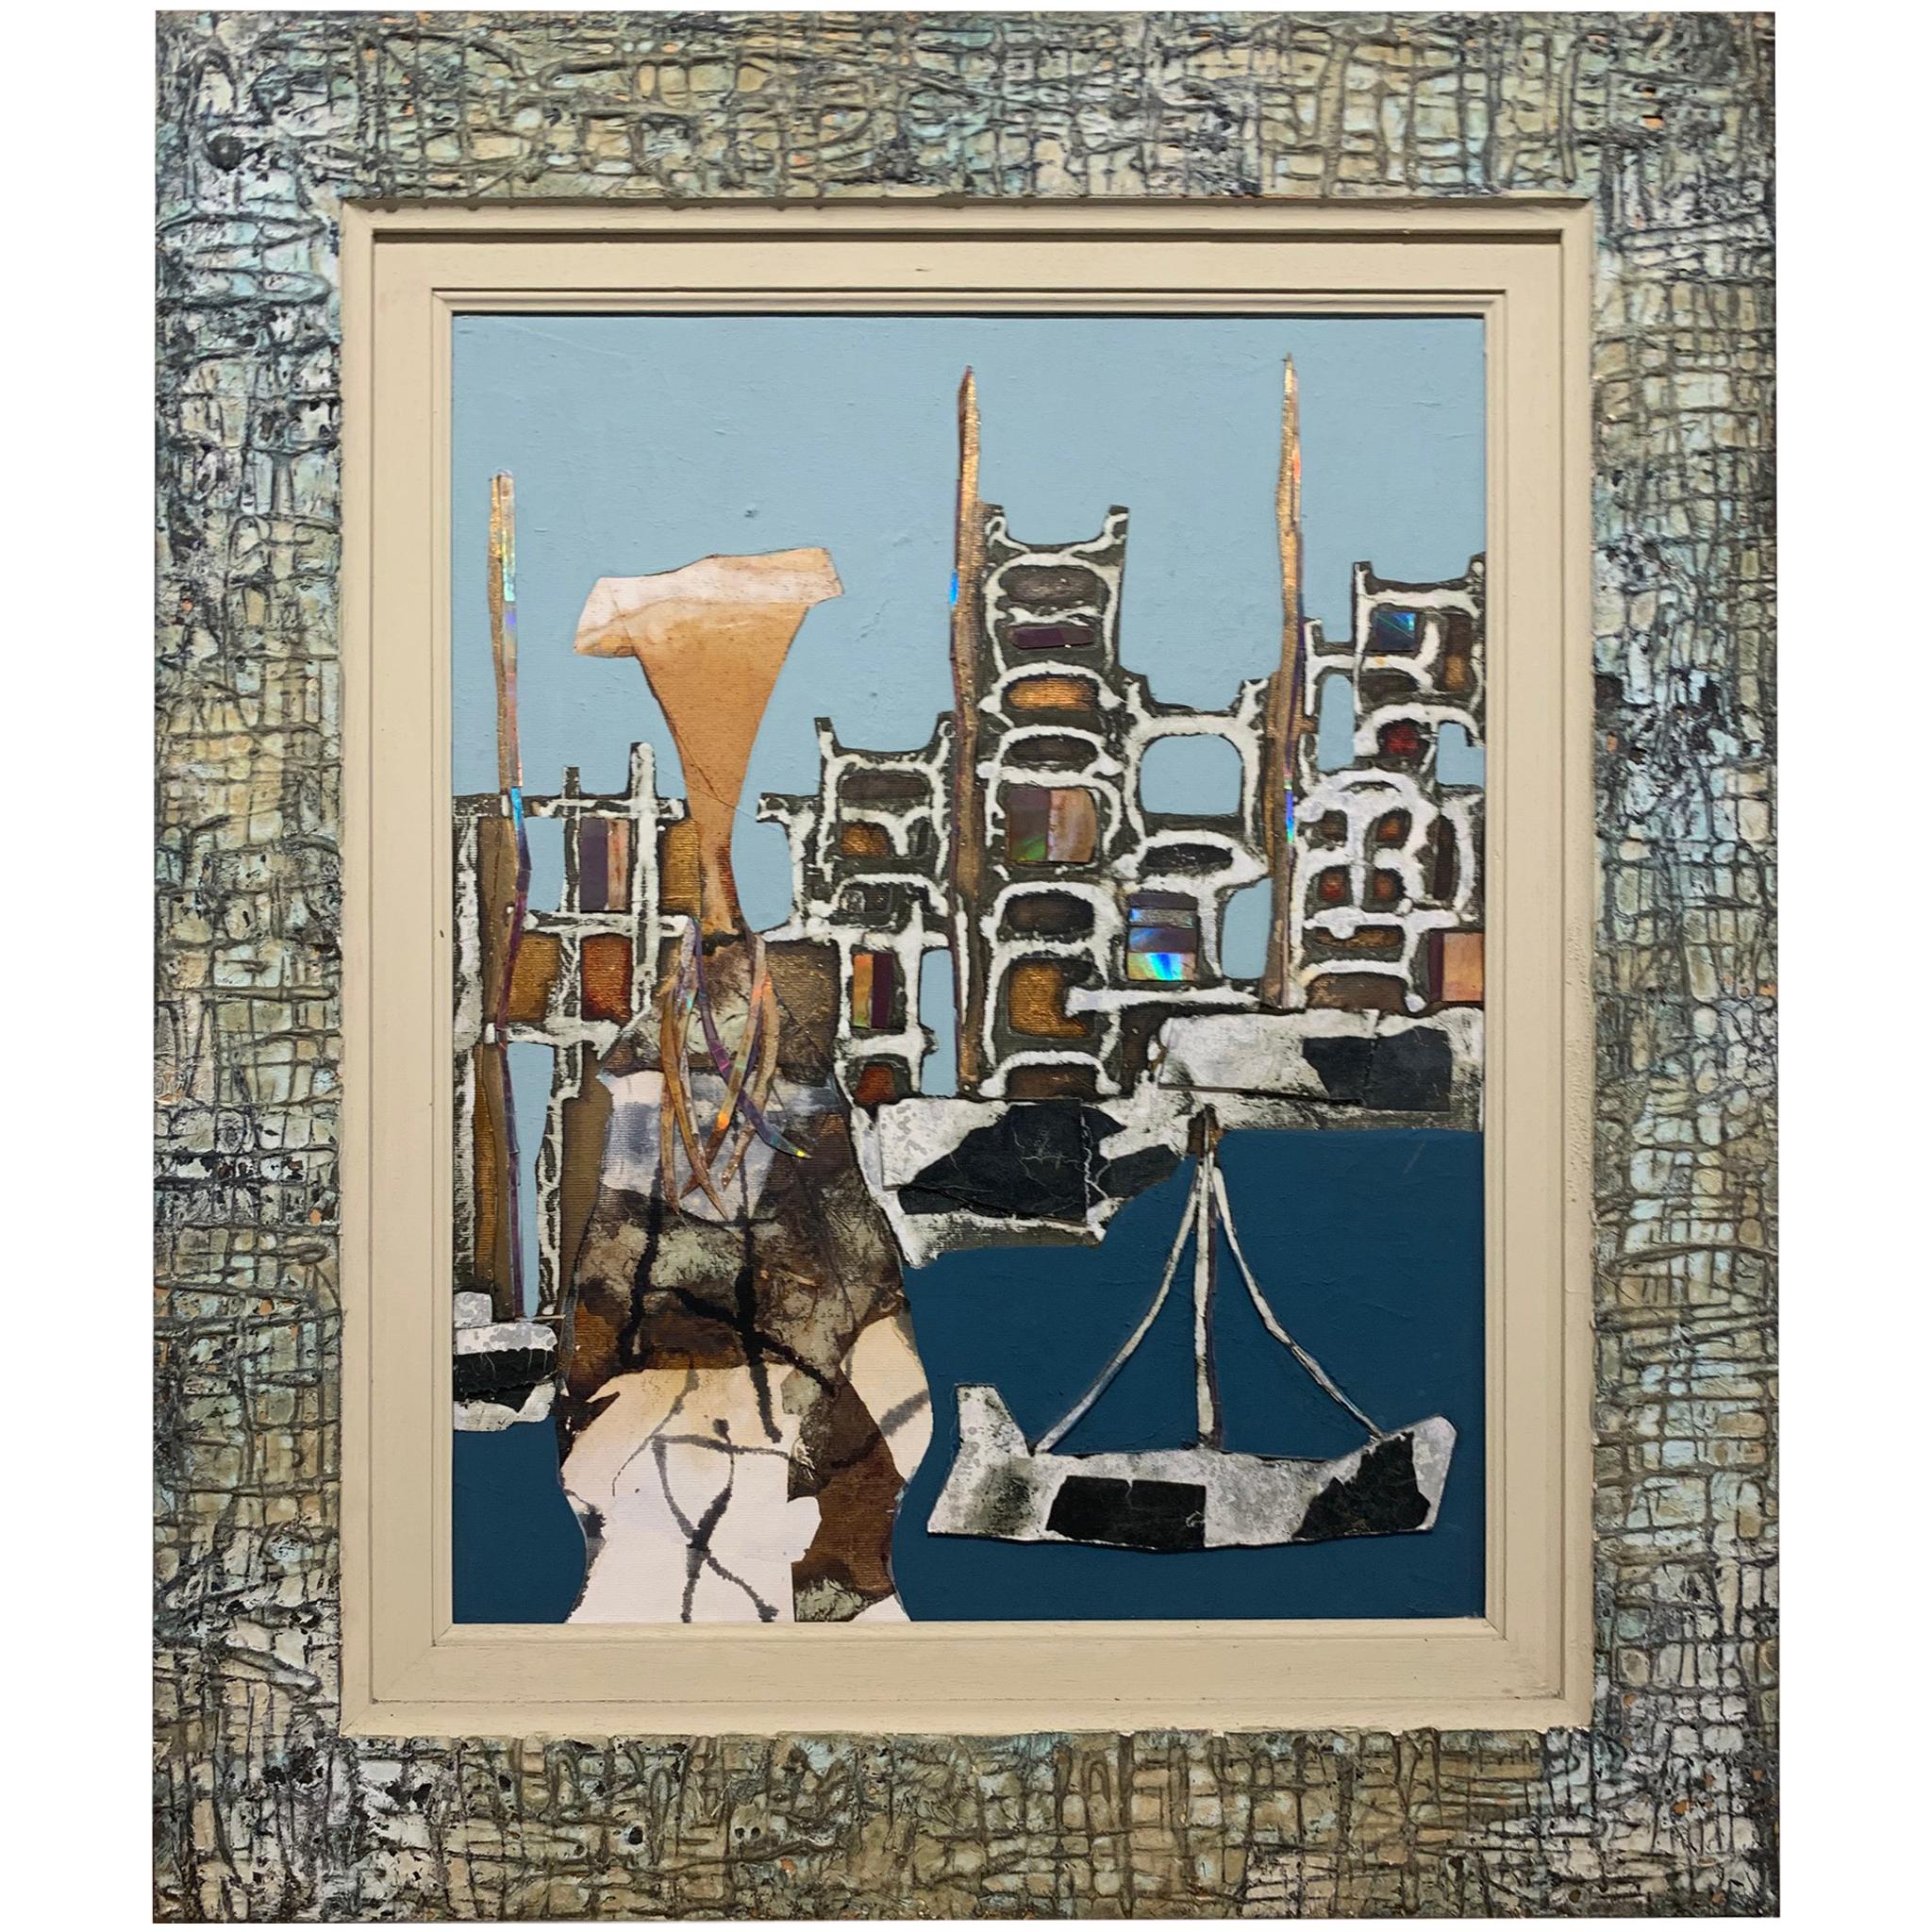 Fishermans Wife -Andrea Stella-Figurative Abstract Painting-Mixed Media - Contemporary Mixed Media Art by ANDREA STELLA